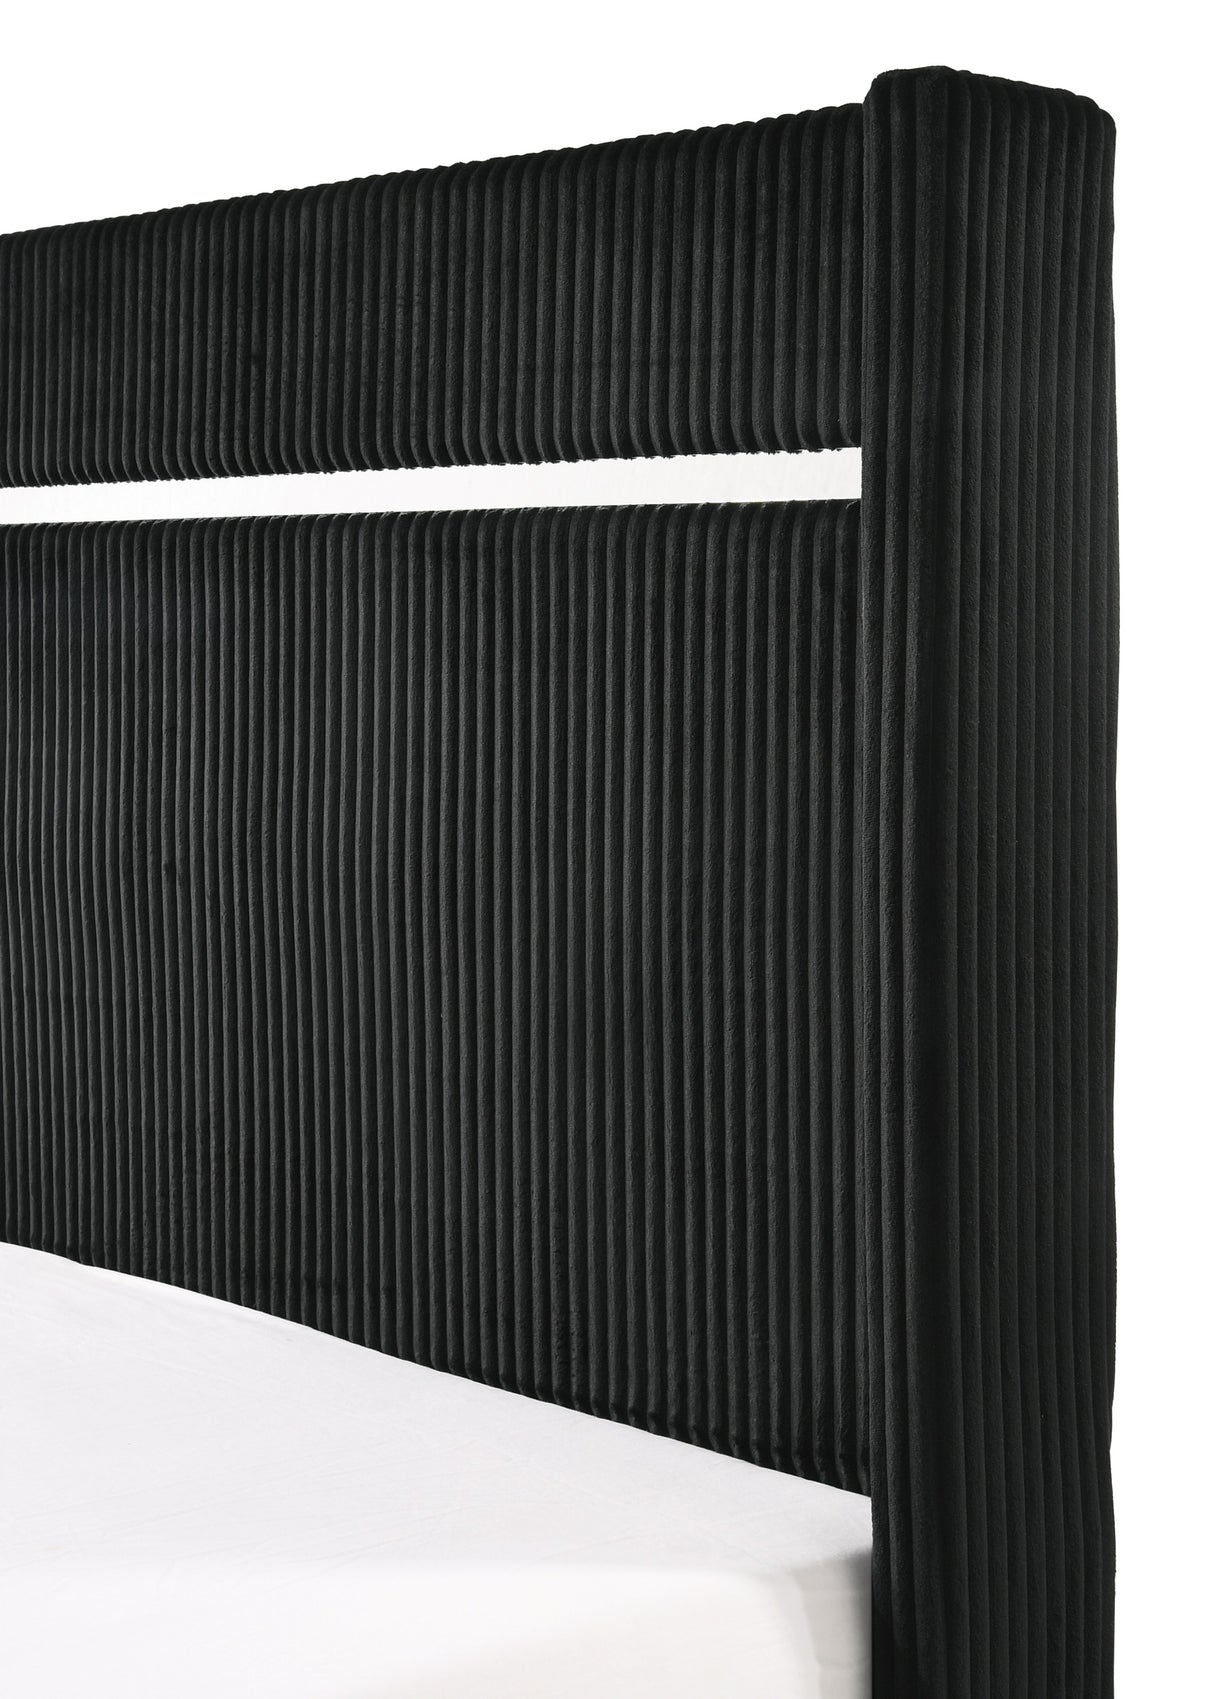 Gennro Black Corduroy King Upholstered Panel Bed